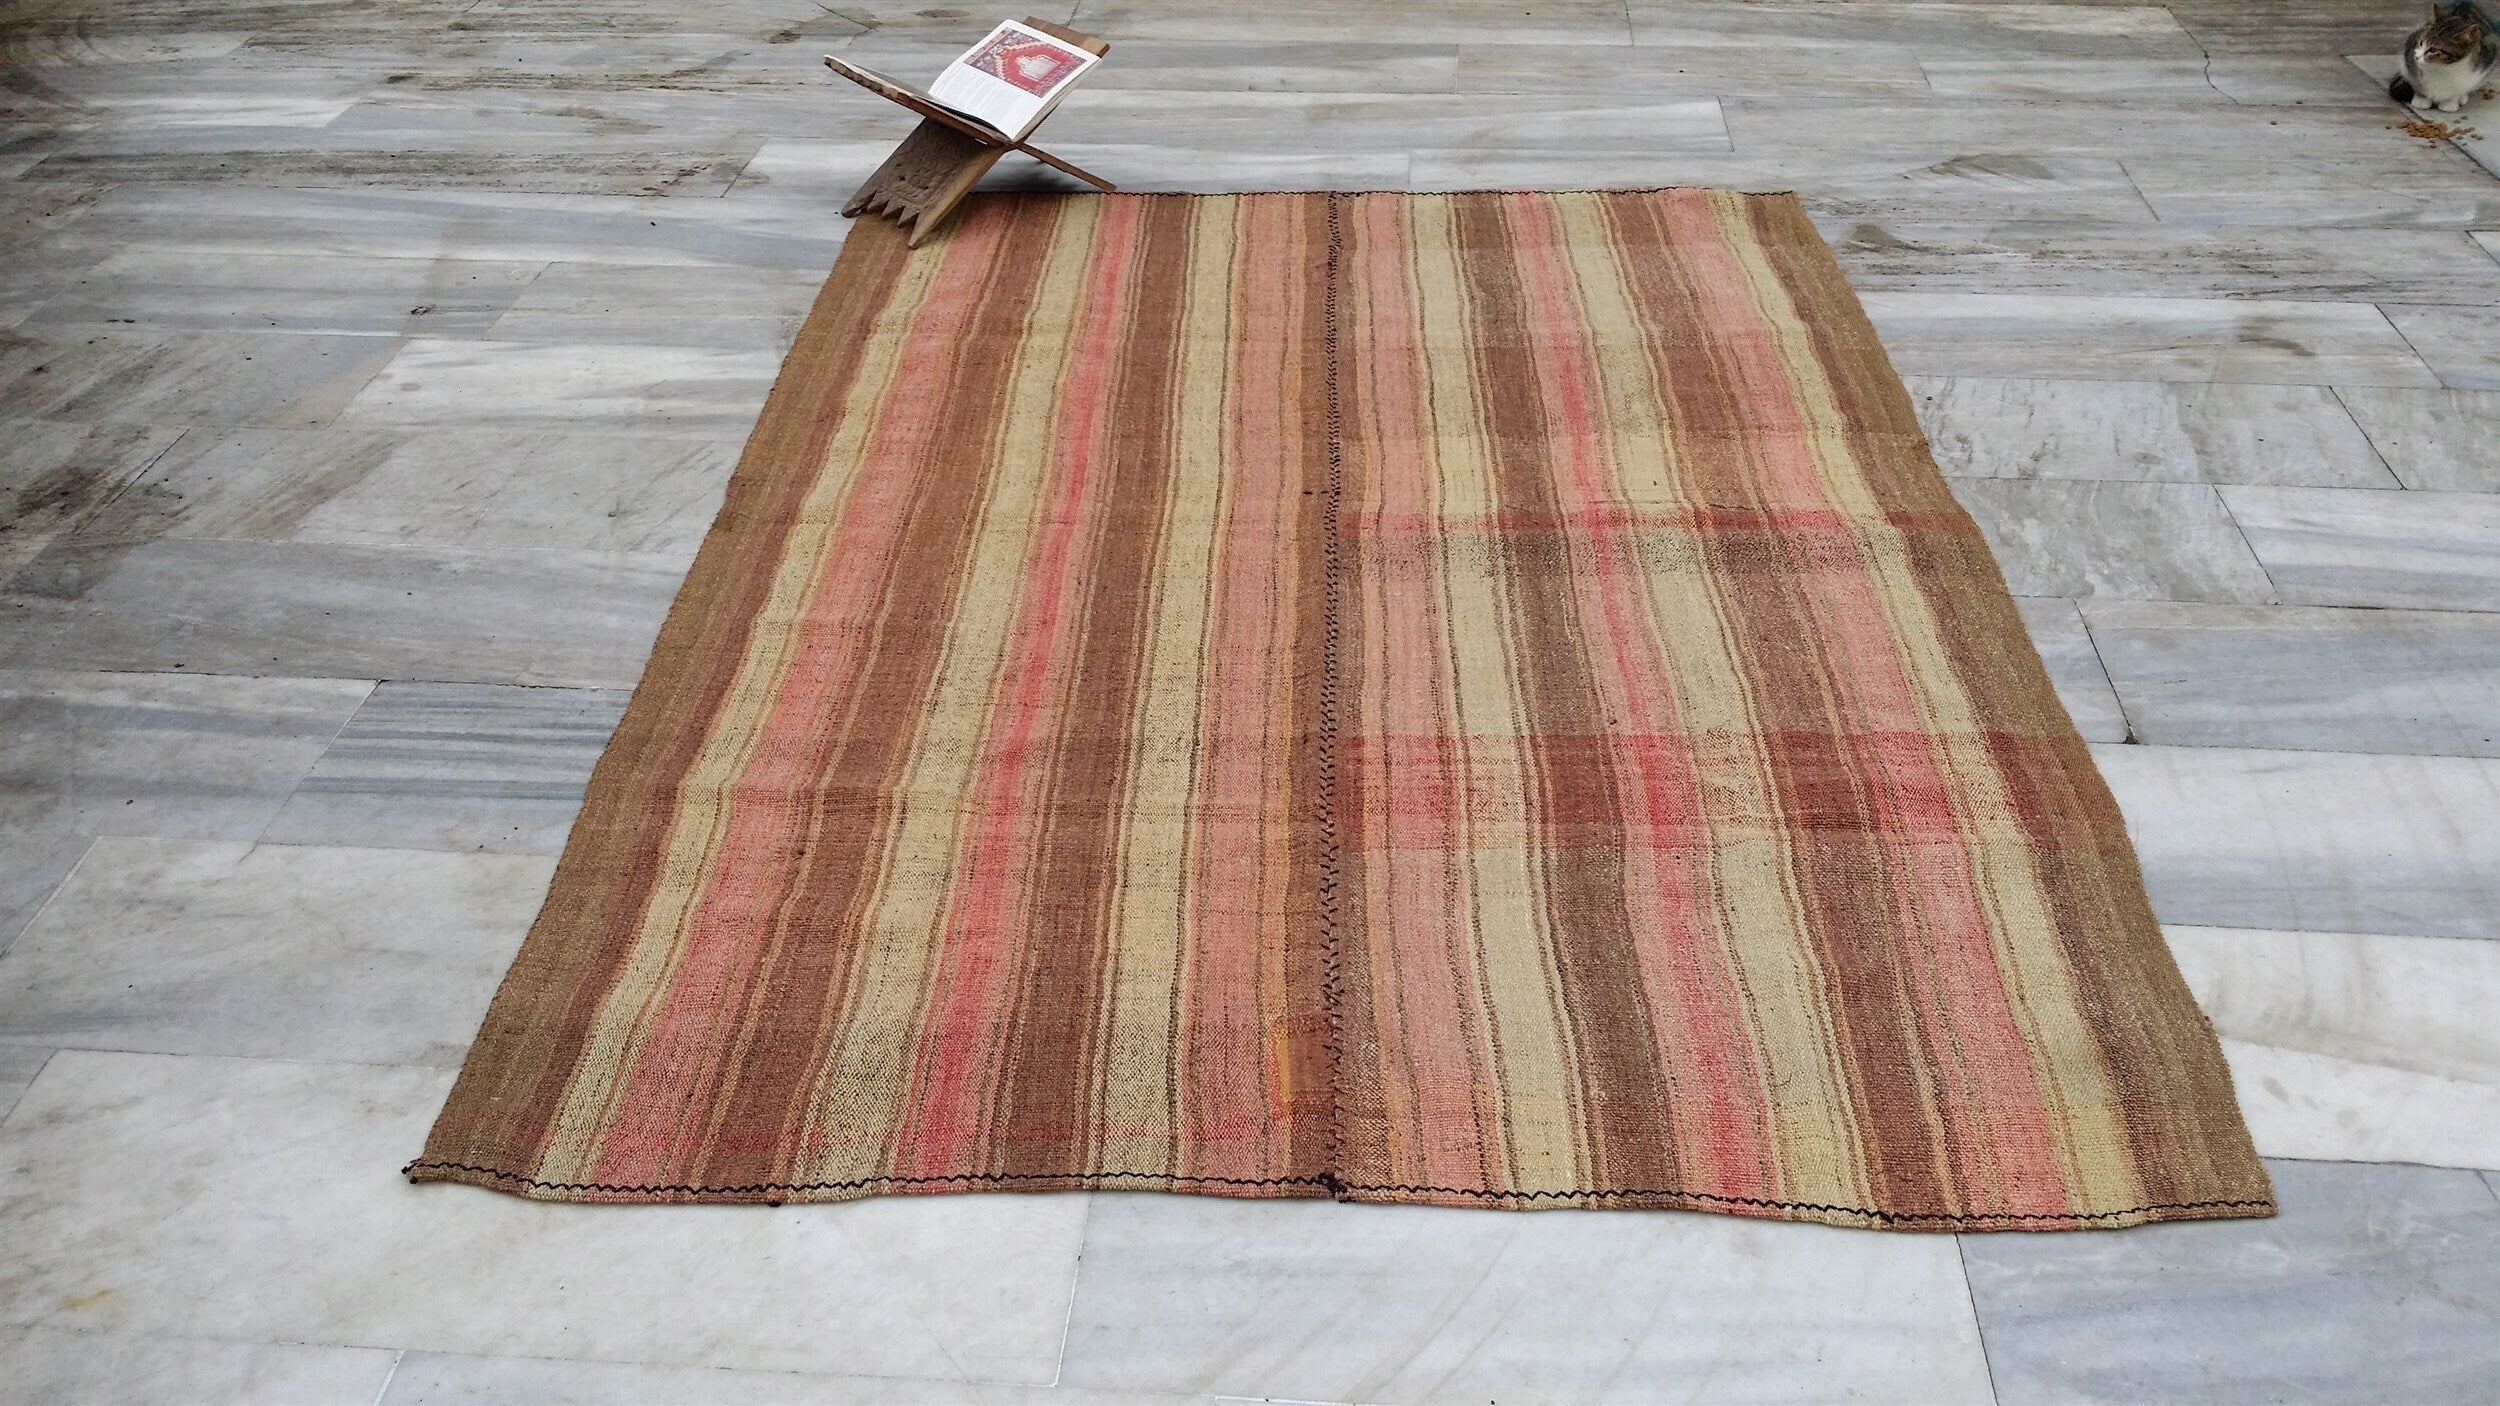 Turkish Kilim Rug, Handmade Organic Wool Rug, Tribal Nomadic Moroccan Carpet Bohemian Living Room Rustic Decor Persian Area Rug 7'3"x4'9"